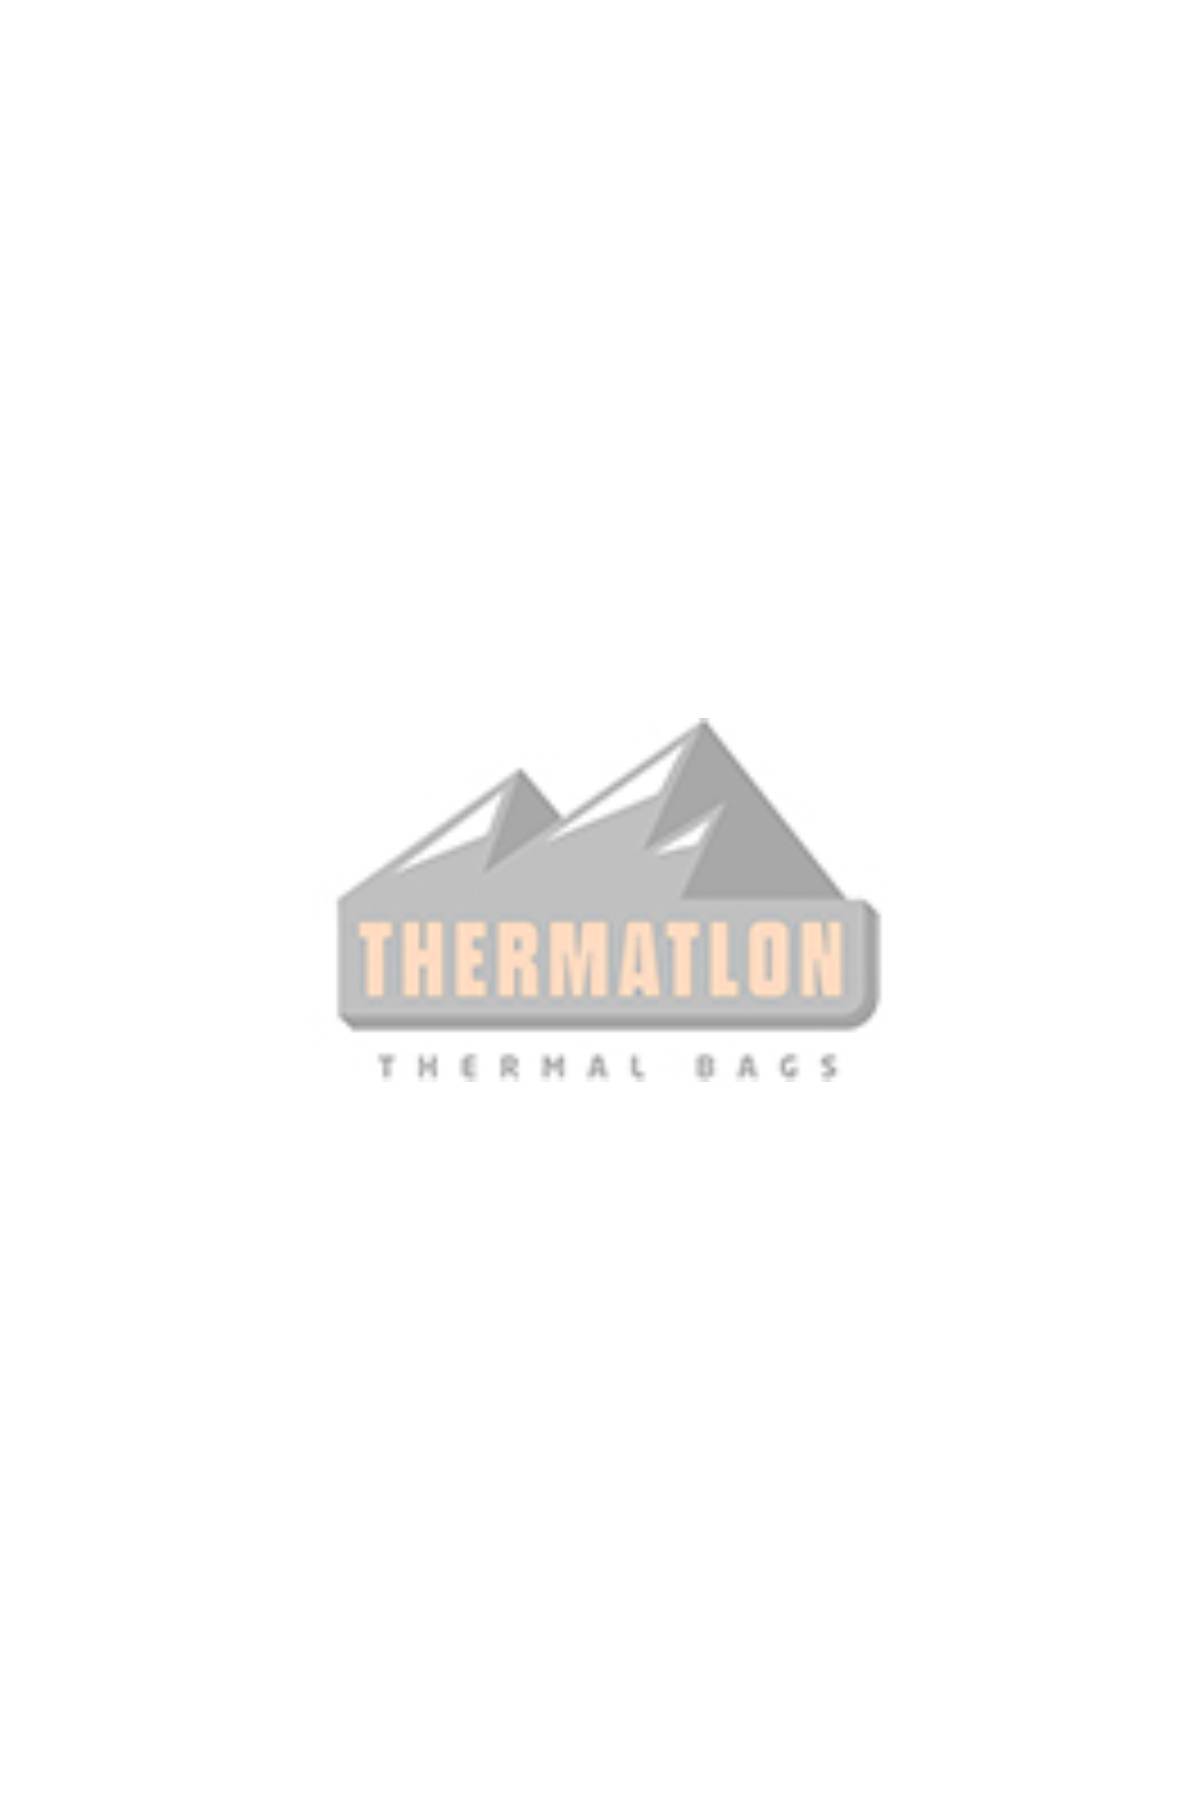 Thermatlon Picnic Cooler 6 LT